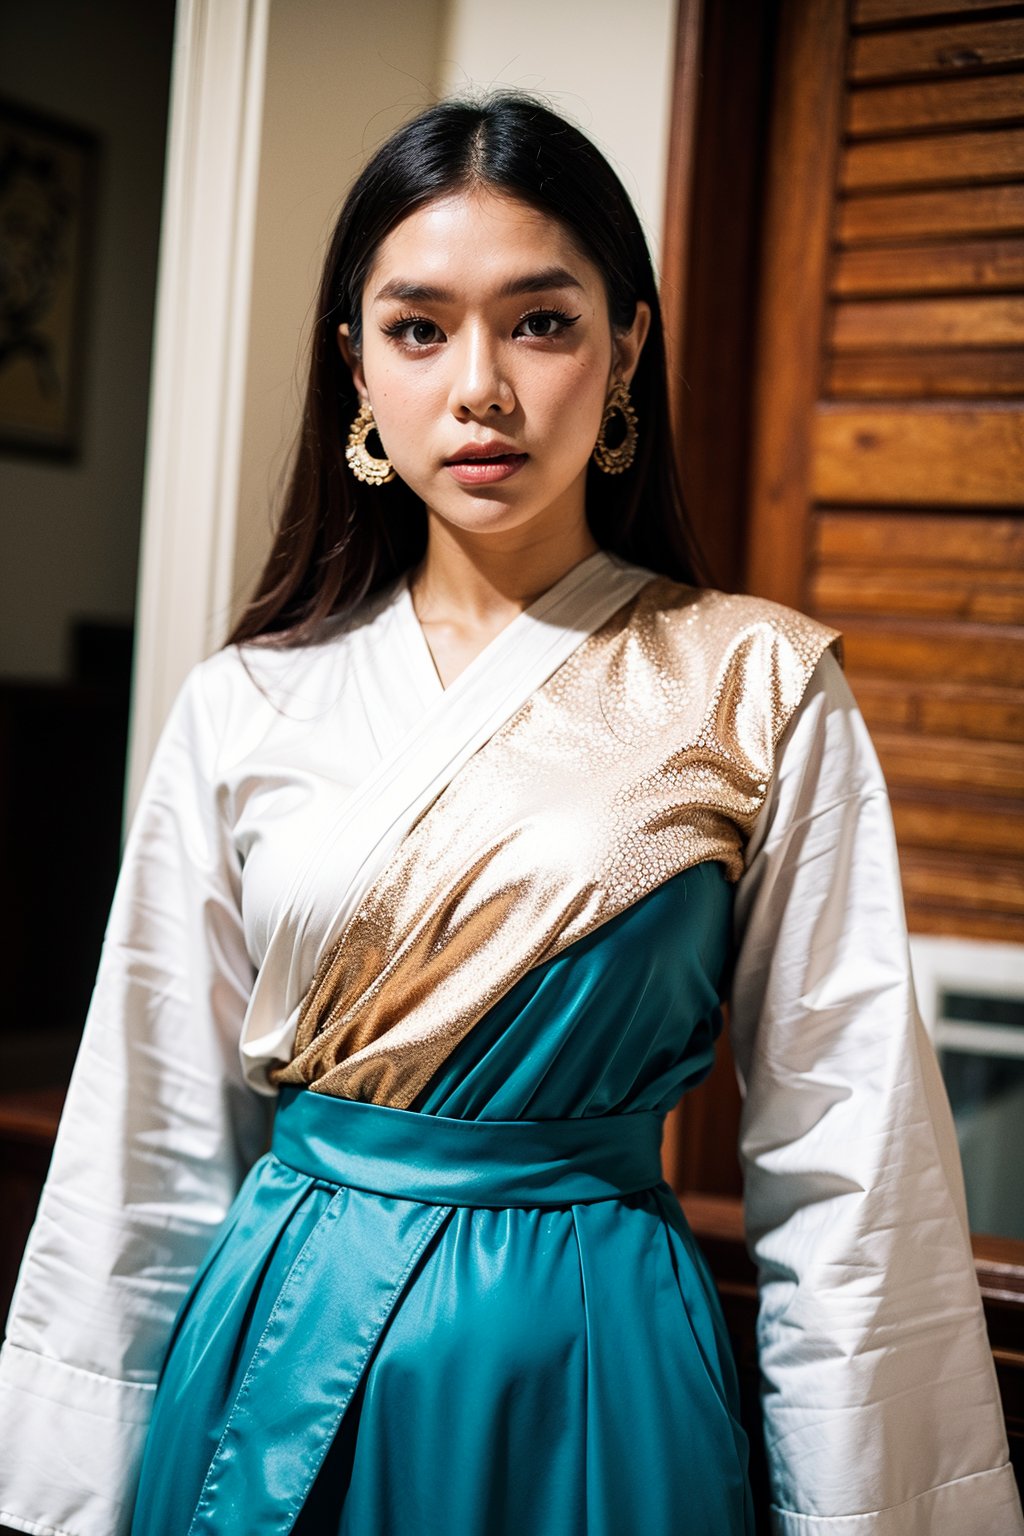 (Lady), medium shot, Thai traditional cloth